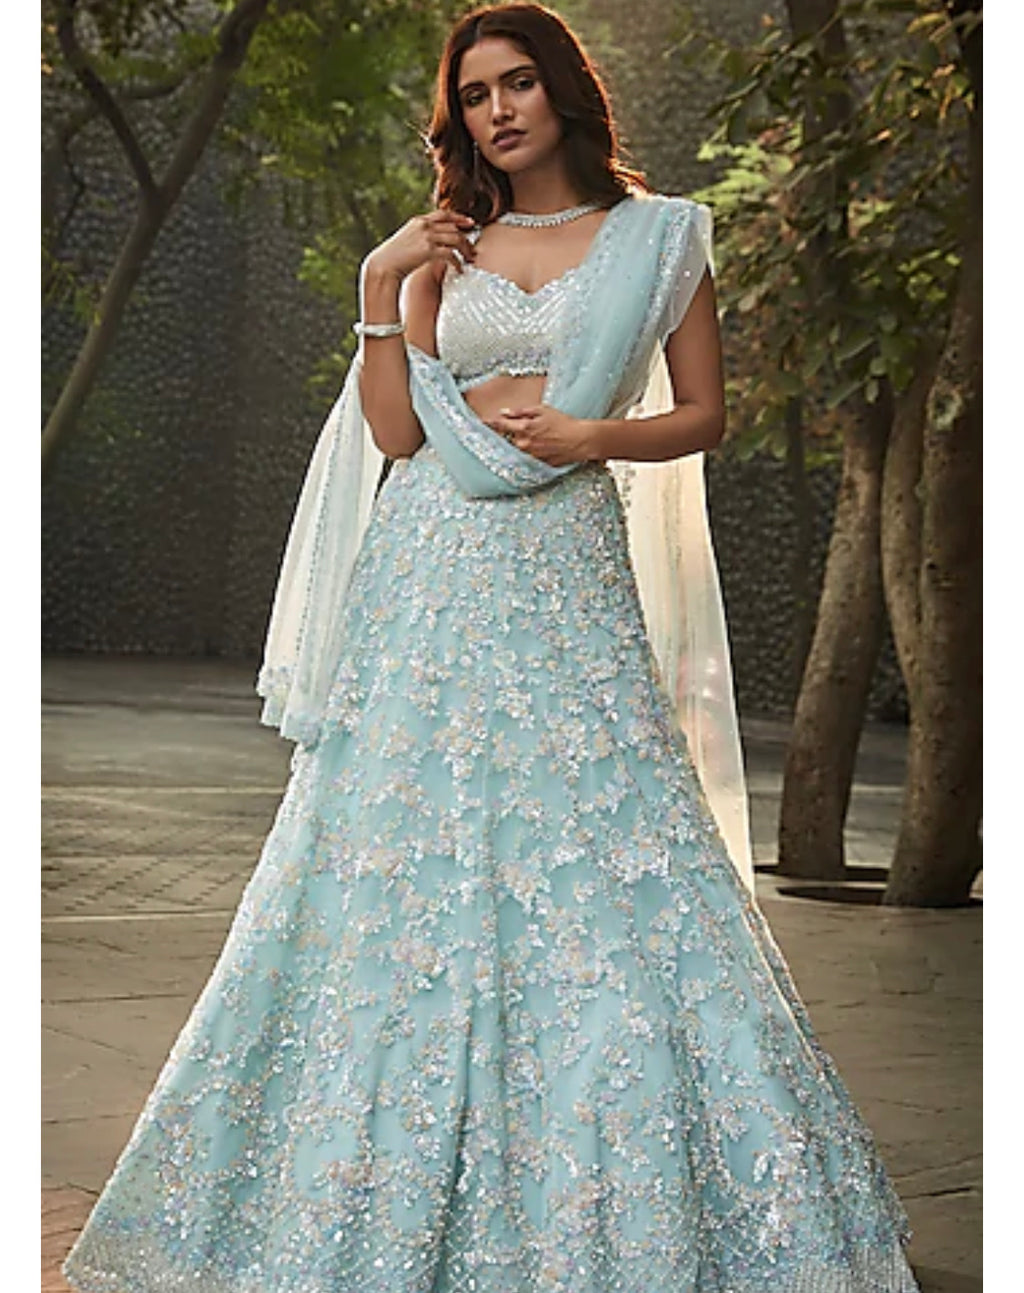 Mumbai Lehenga Shopping Guide | Indian gowns dresses, Indian fashion  dresses, Indian wedding dress